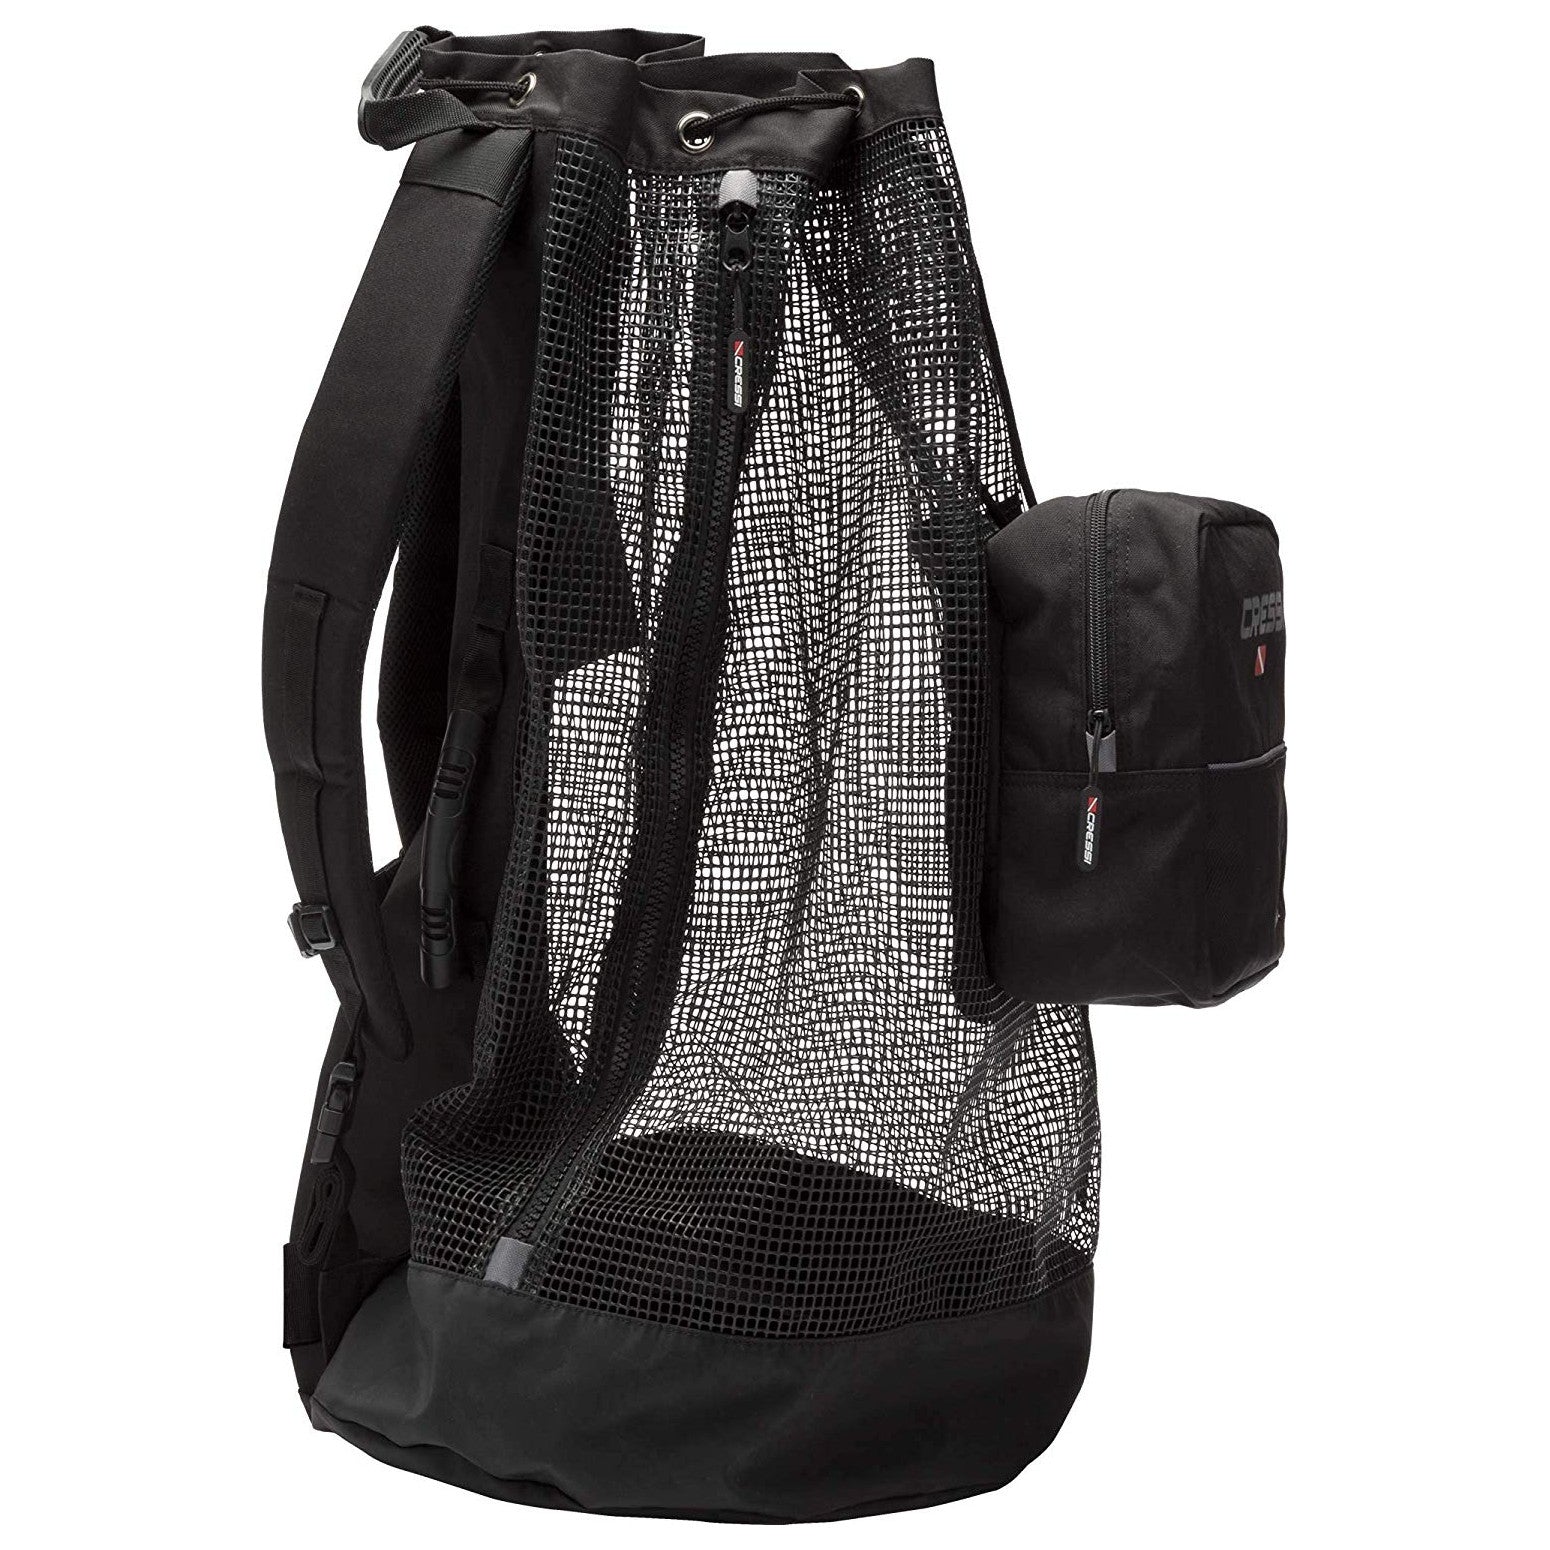 Cressi Heavy Duty Mesh Backpack 90 liters Capacity - DIPNDIVE